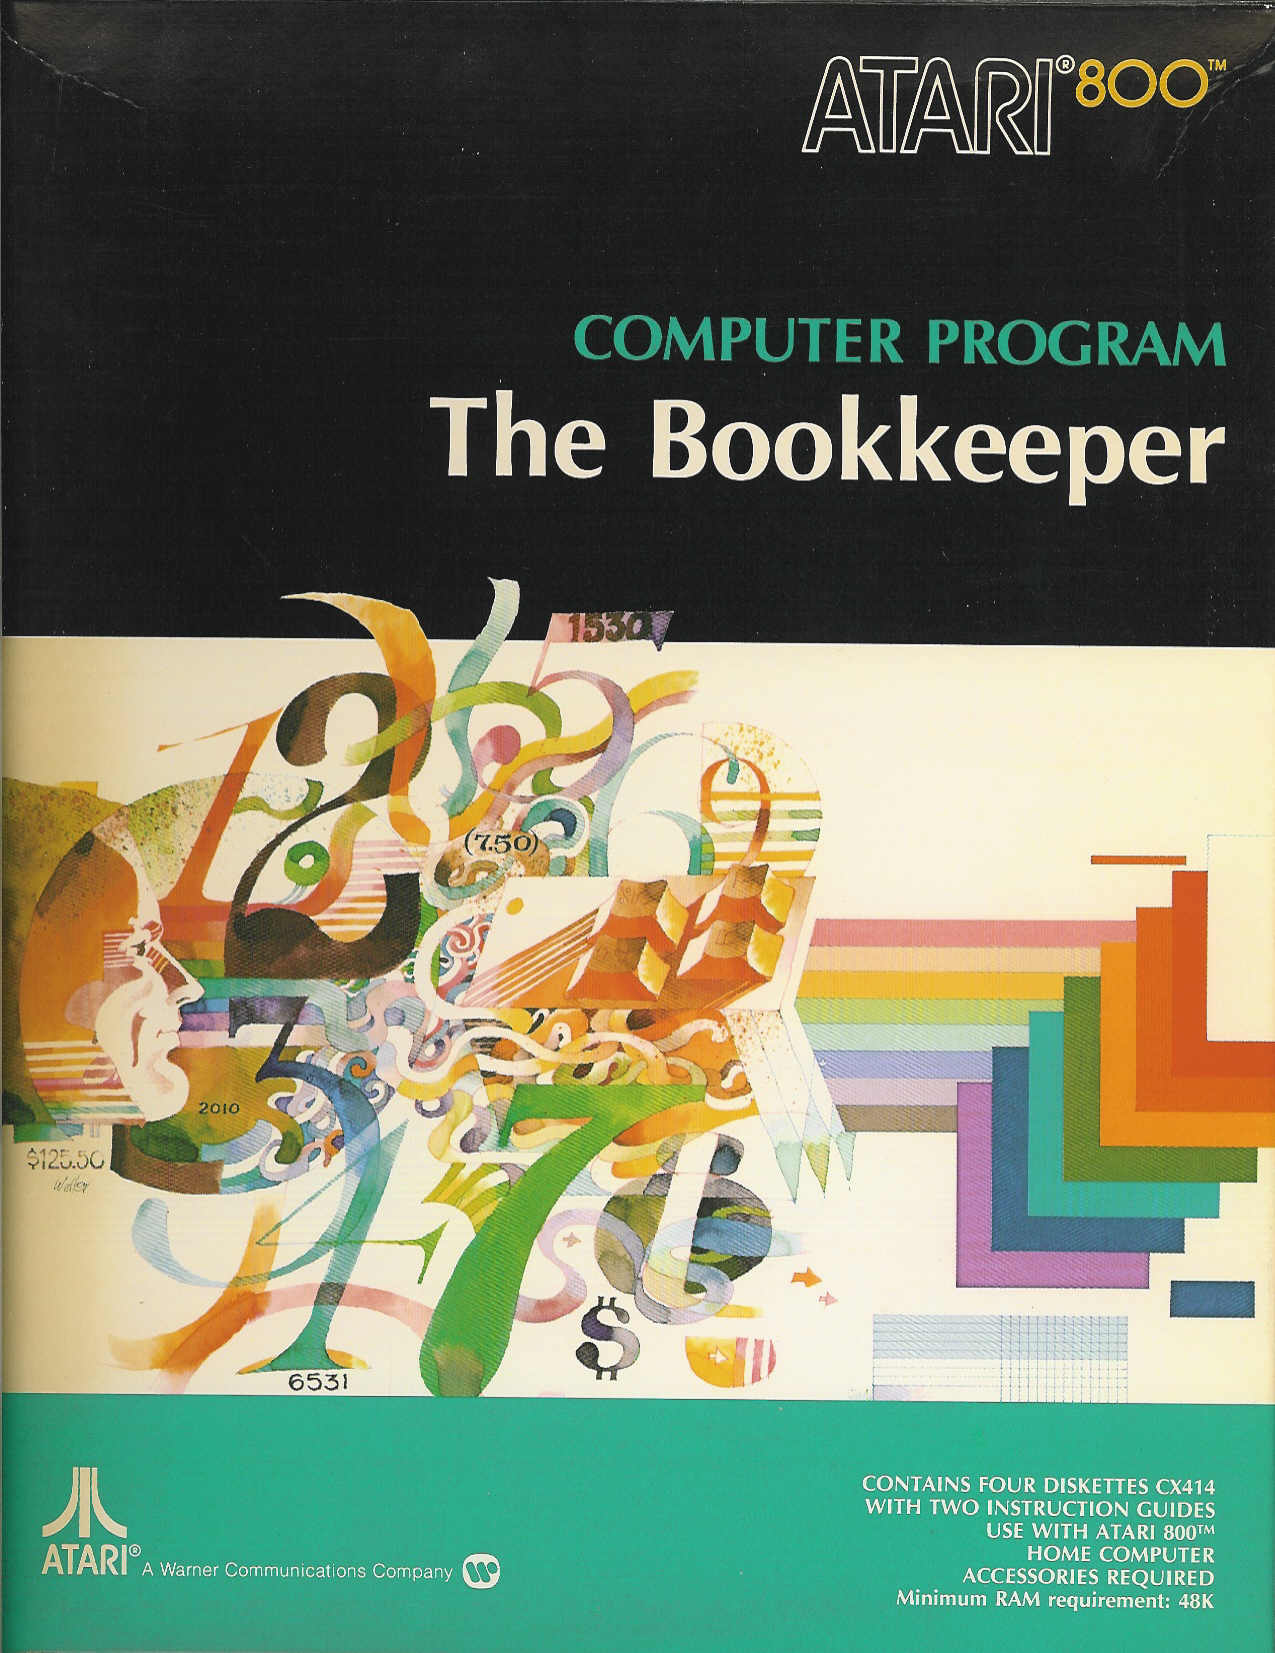 The Bookkeeper/bookkefront.jpg